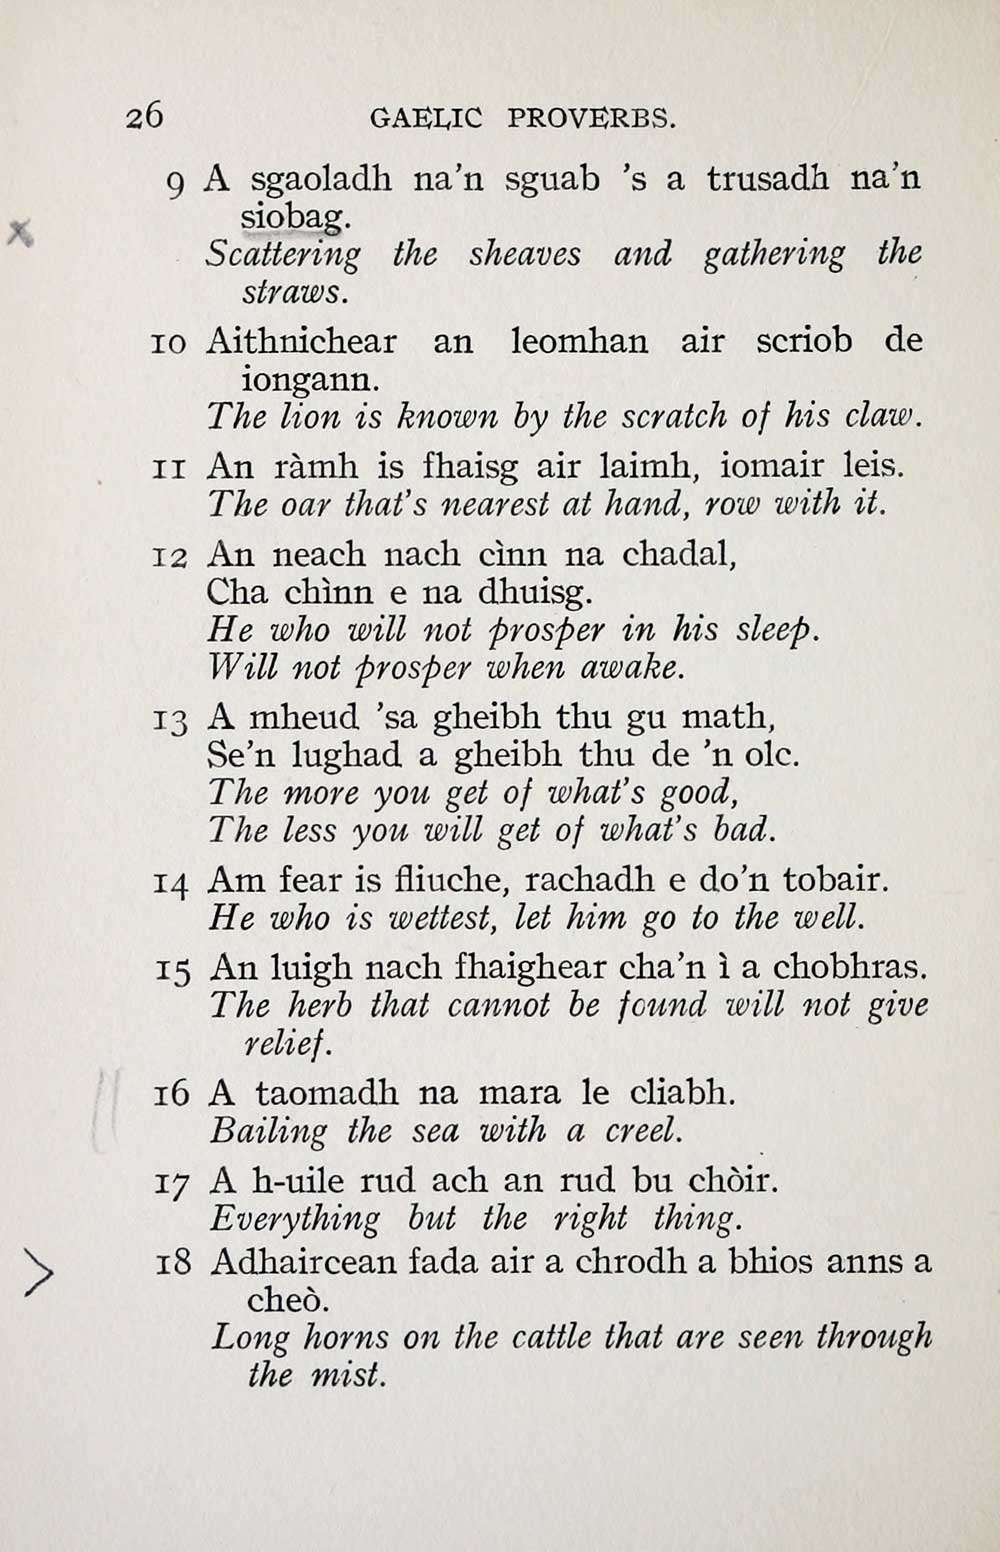 Gaelic Proverbs 